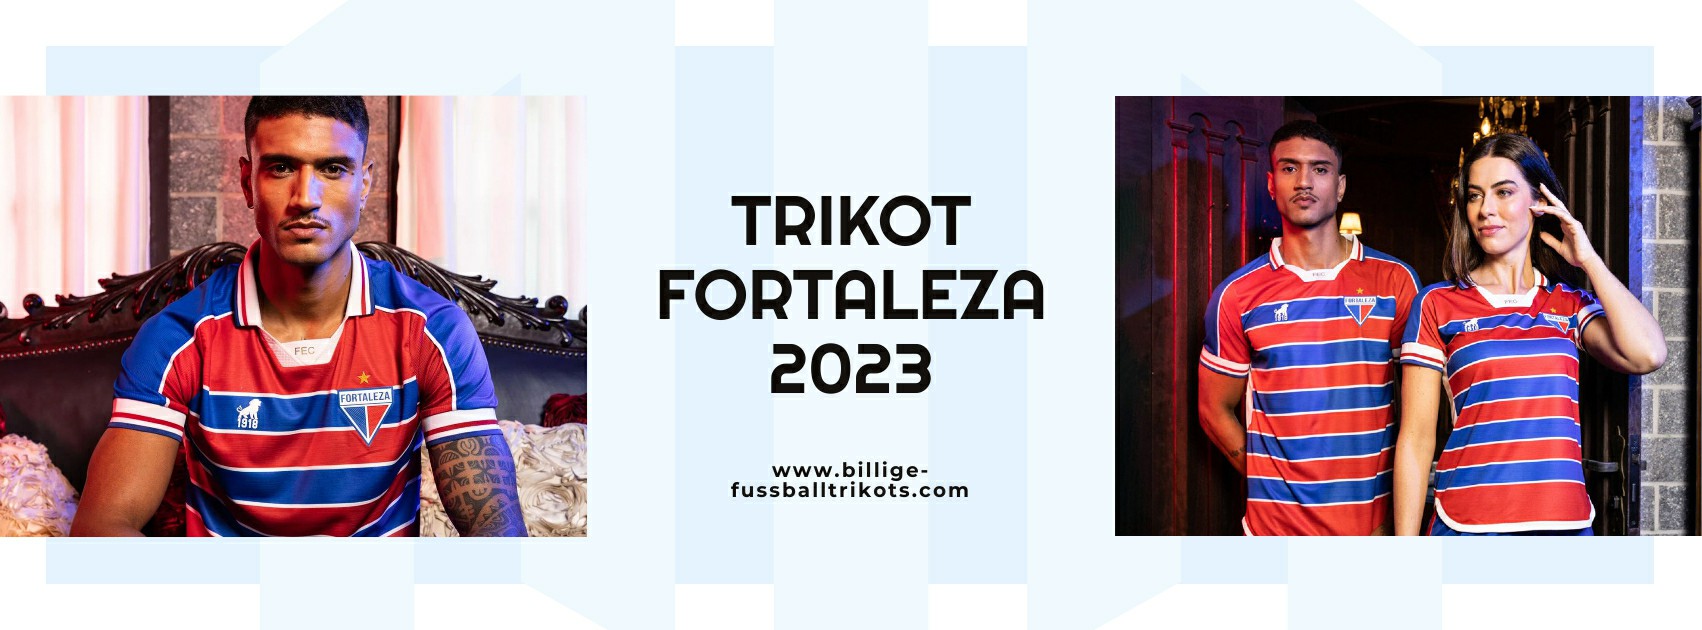 Fortaleza Trikot 2023-2024